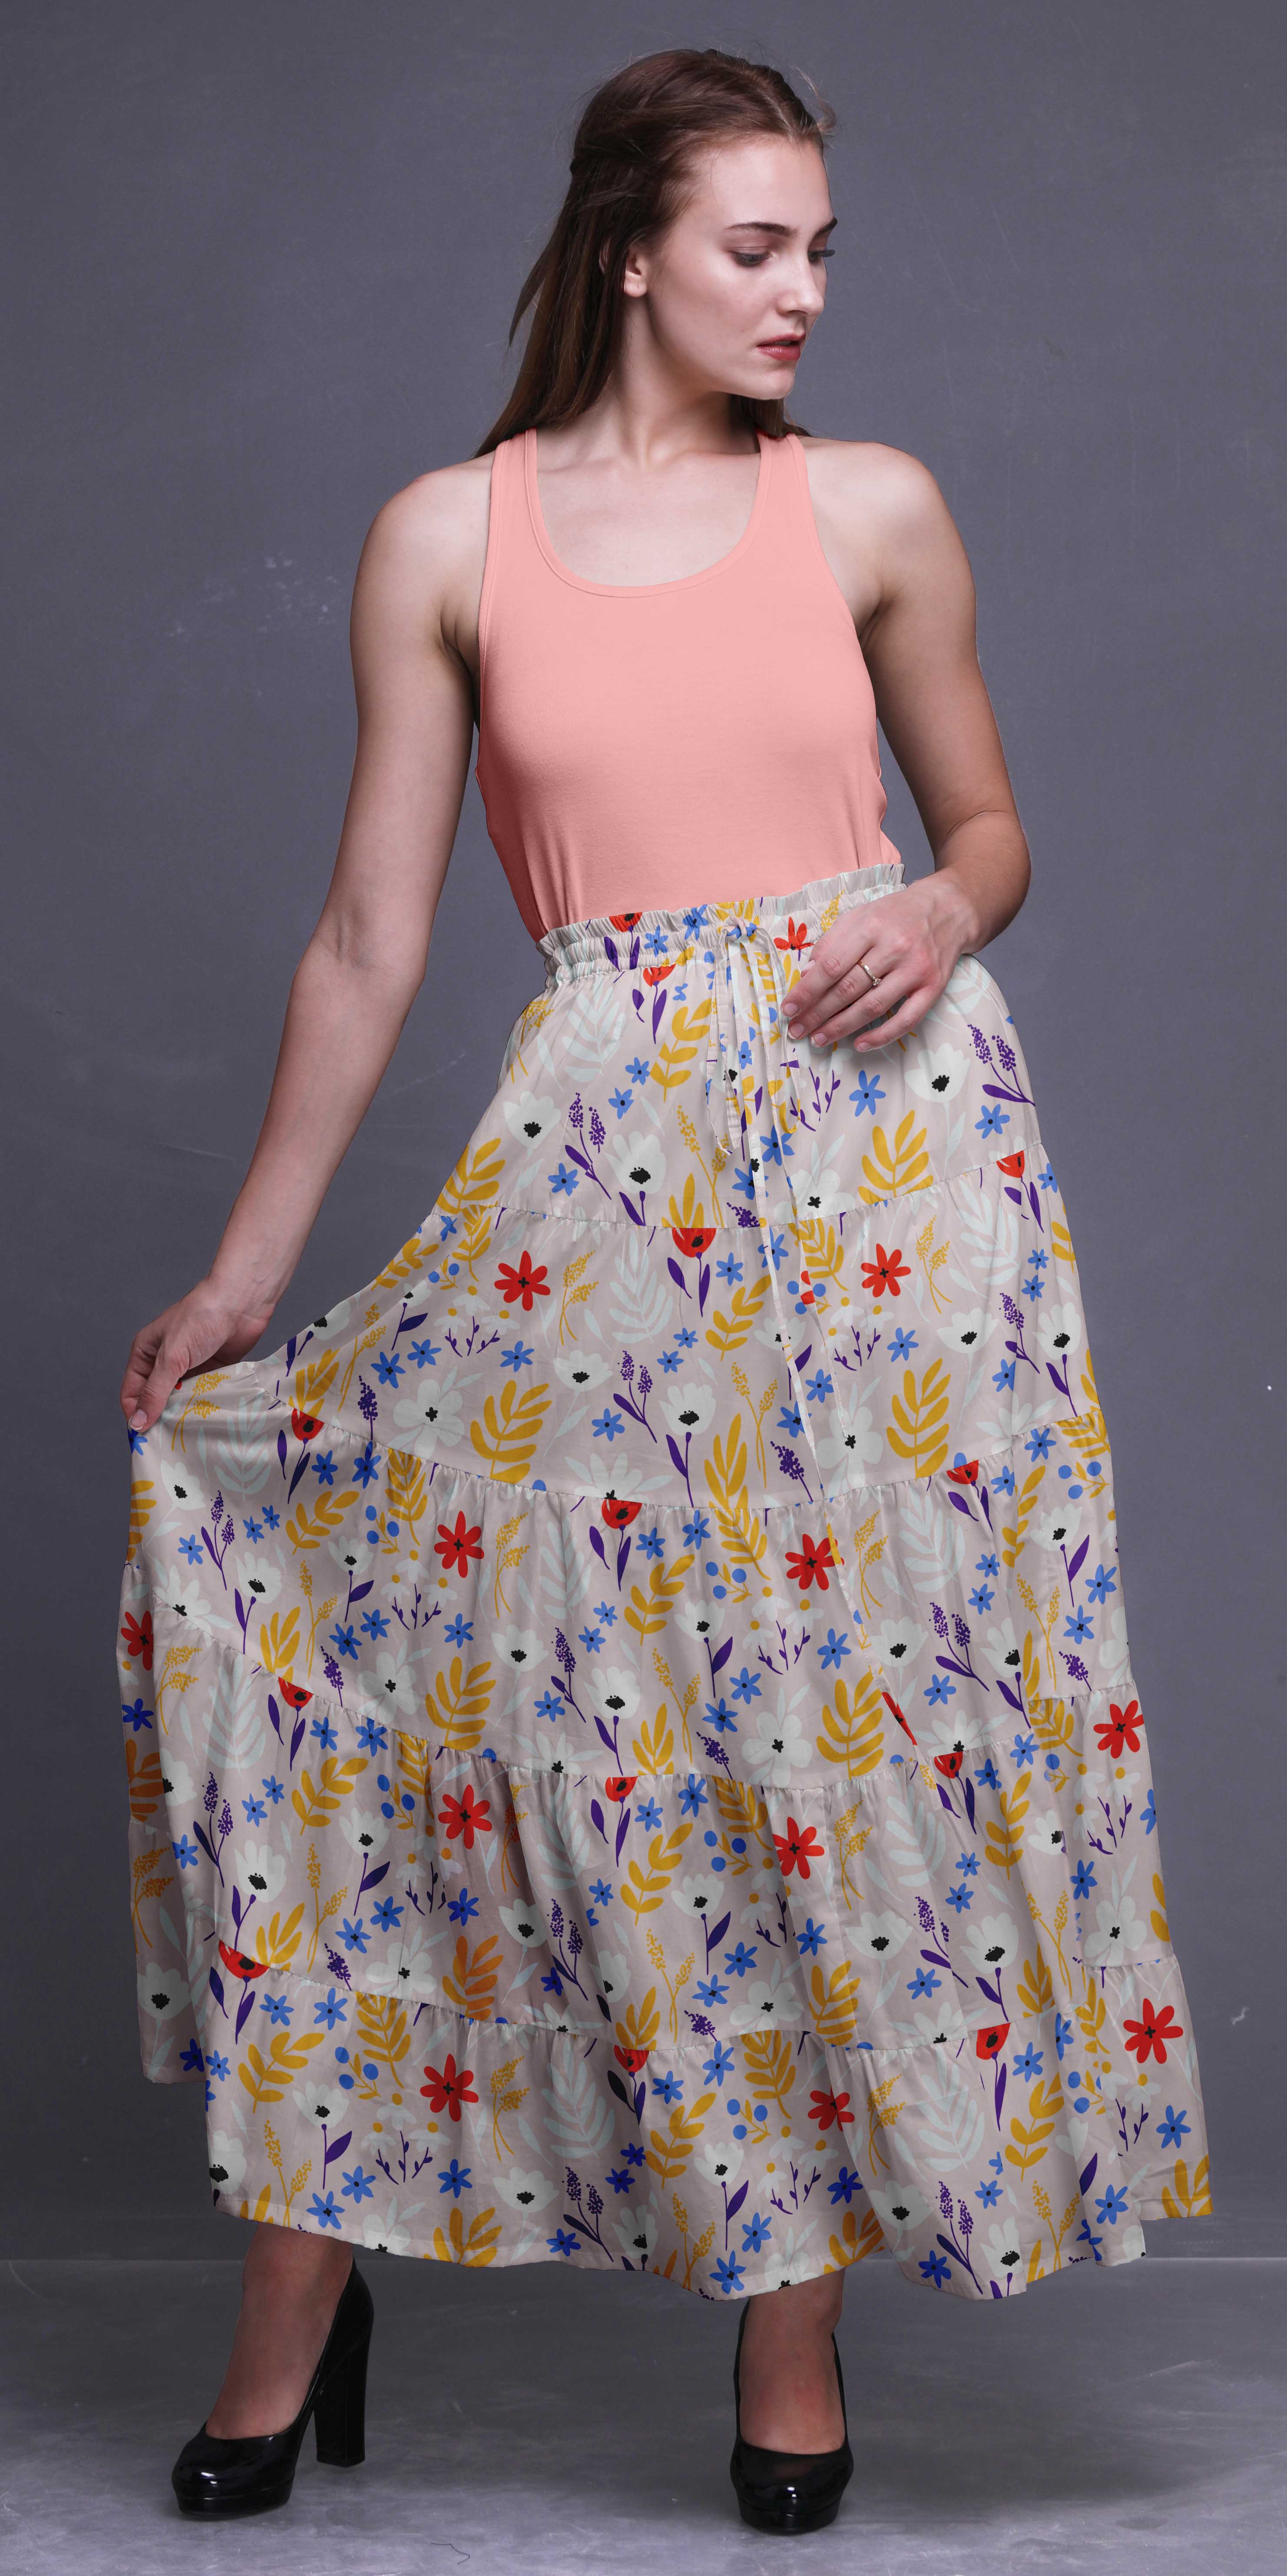 Bimba 5 cotton skirts for women maxi skirt-print cotton fl-221g | eBay